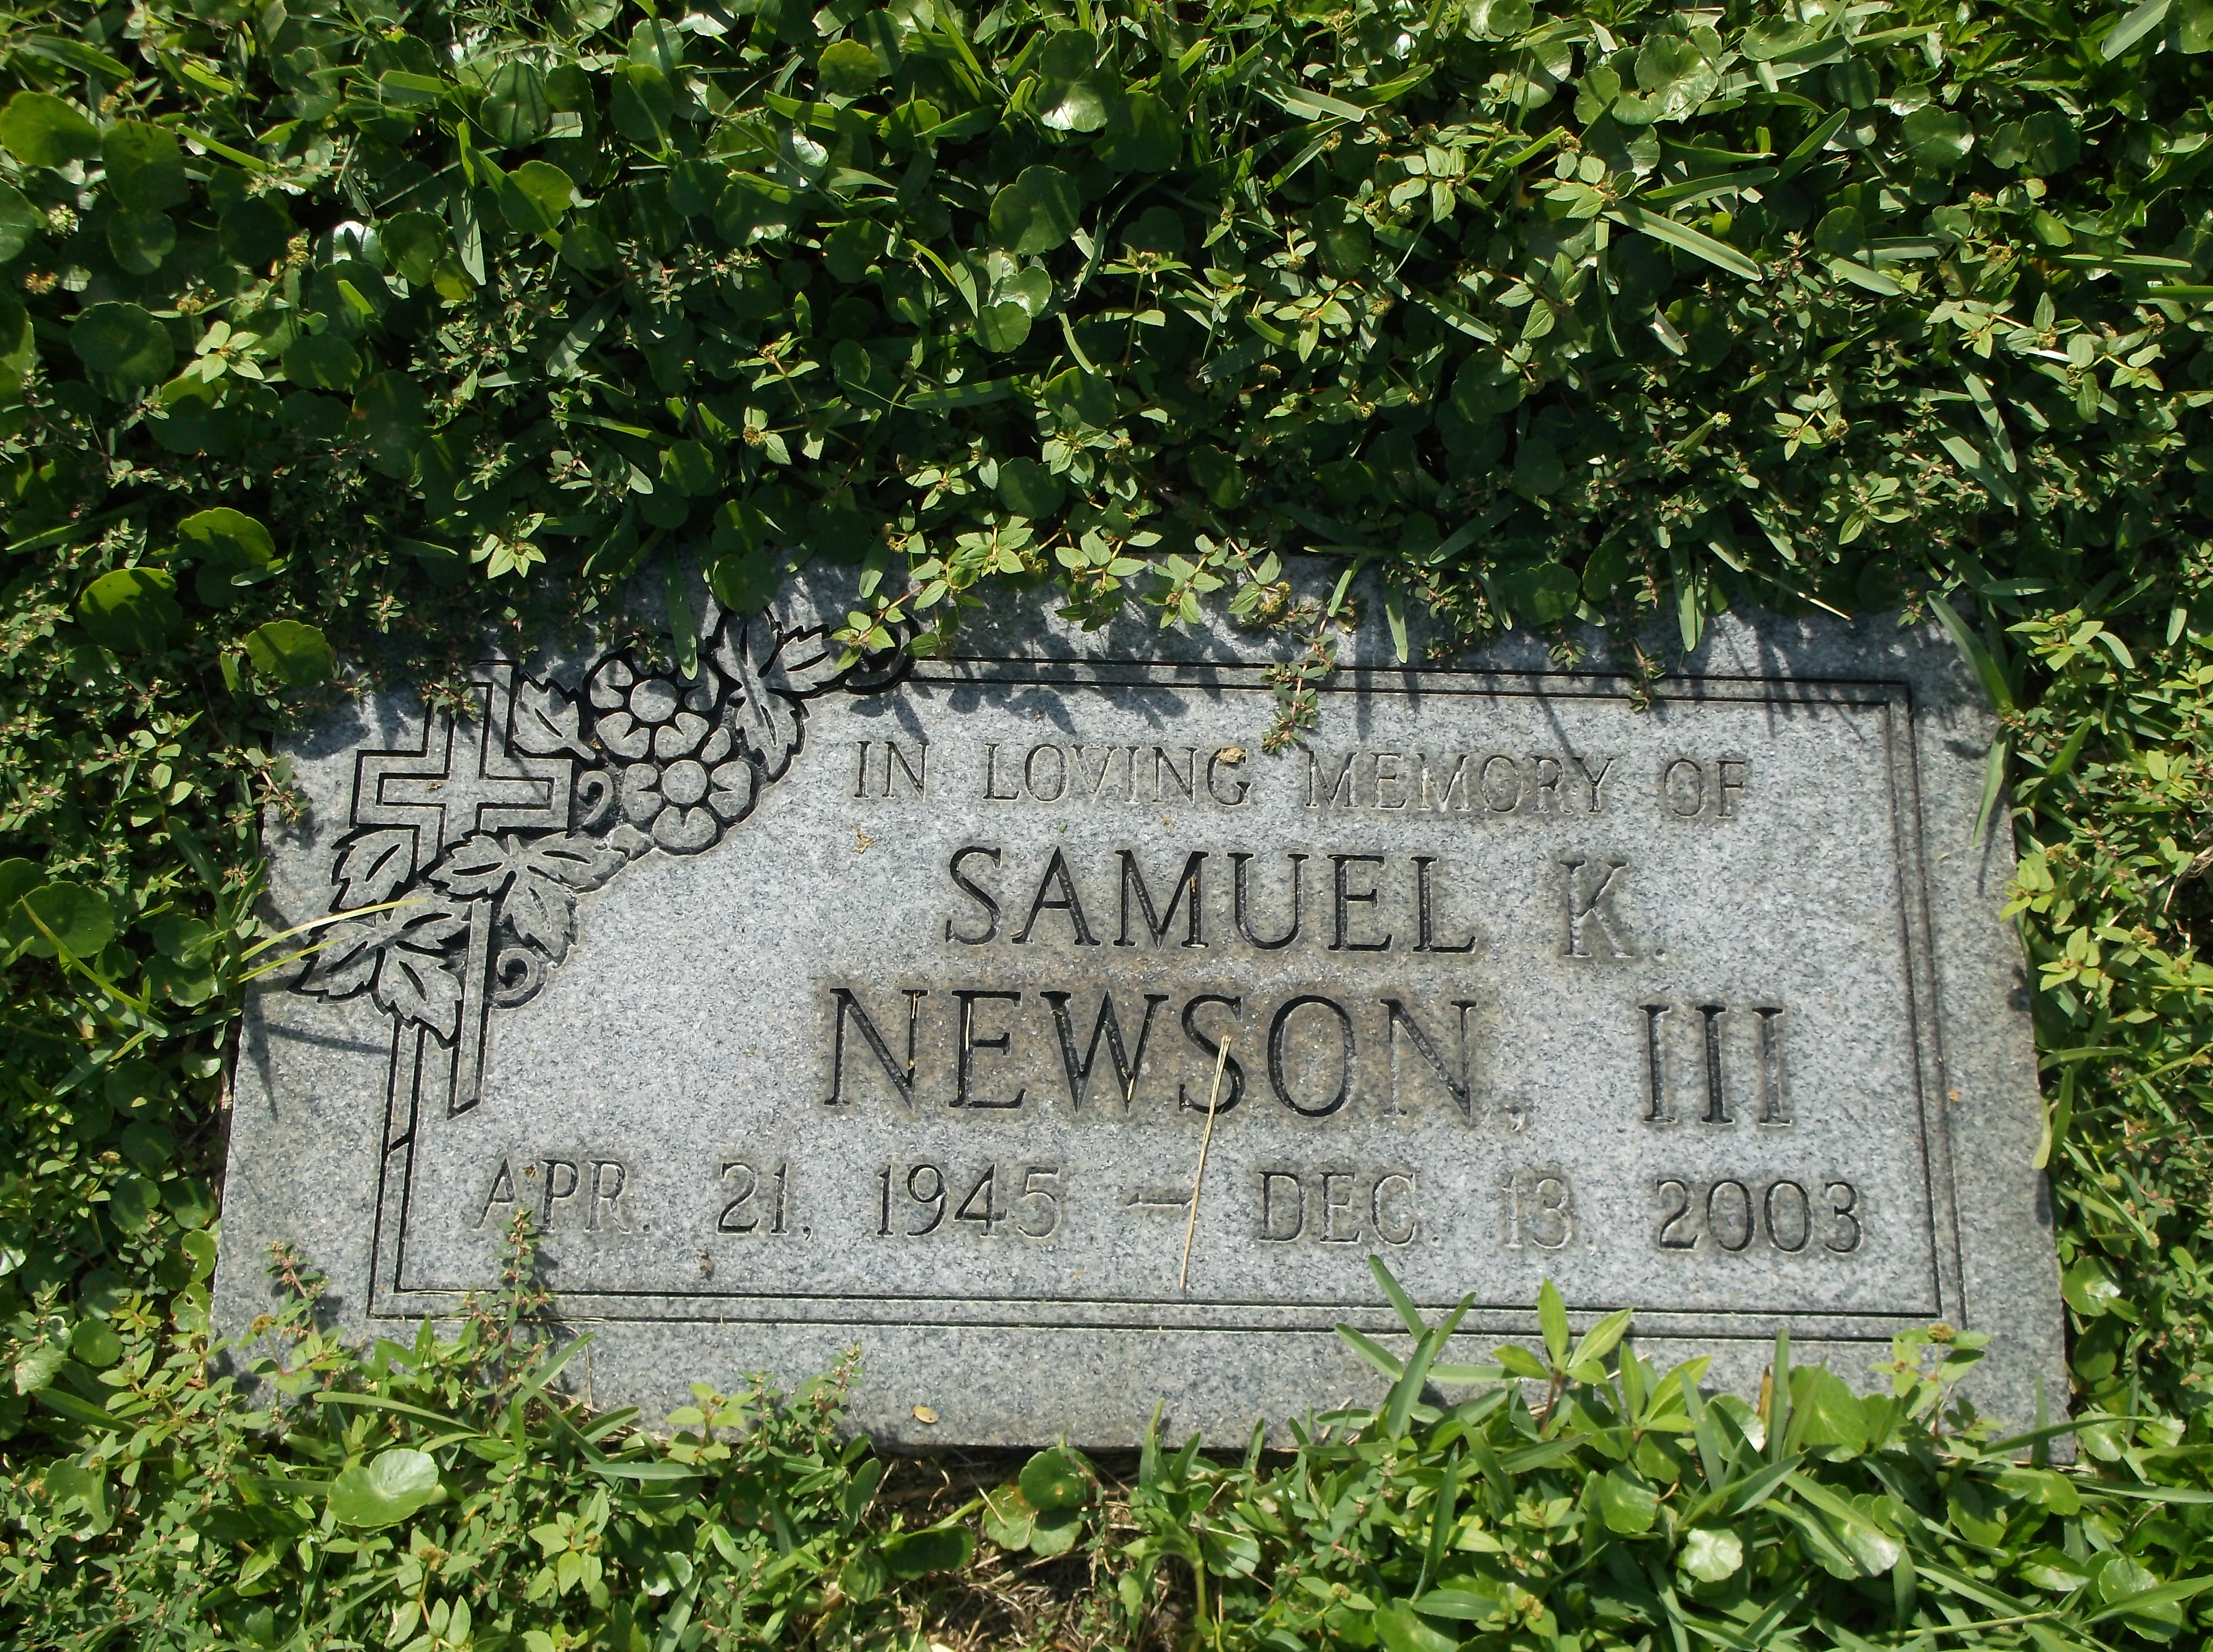 Samuel K Newson, III